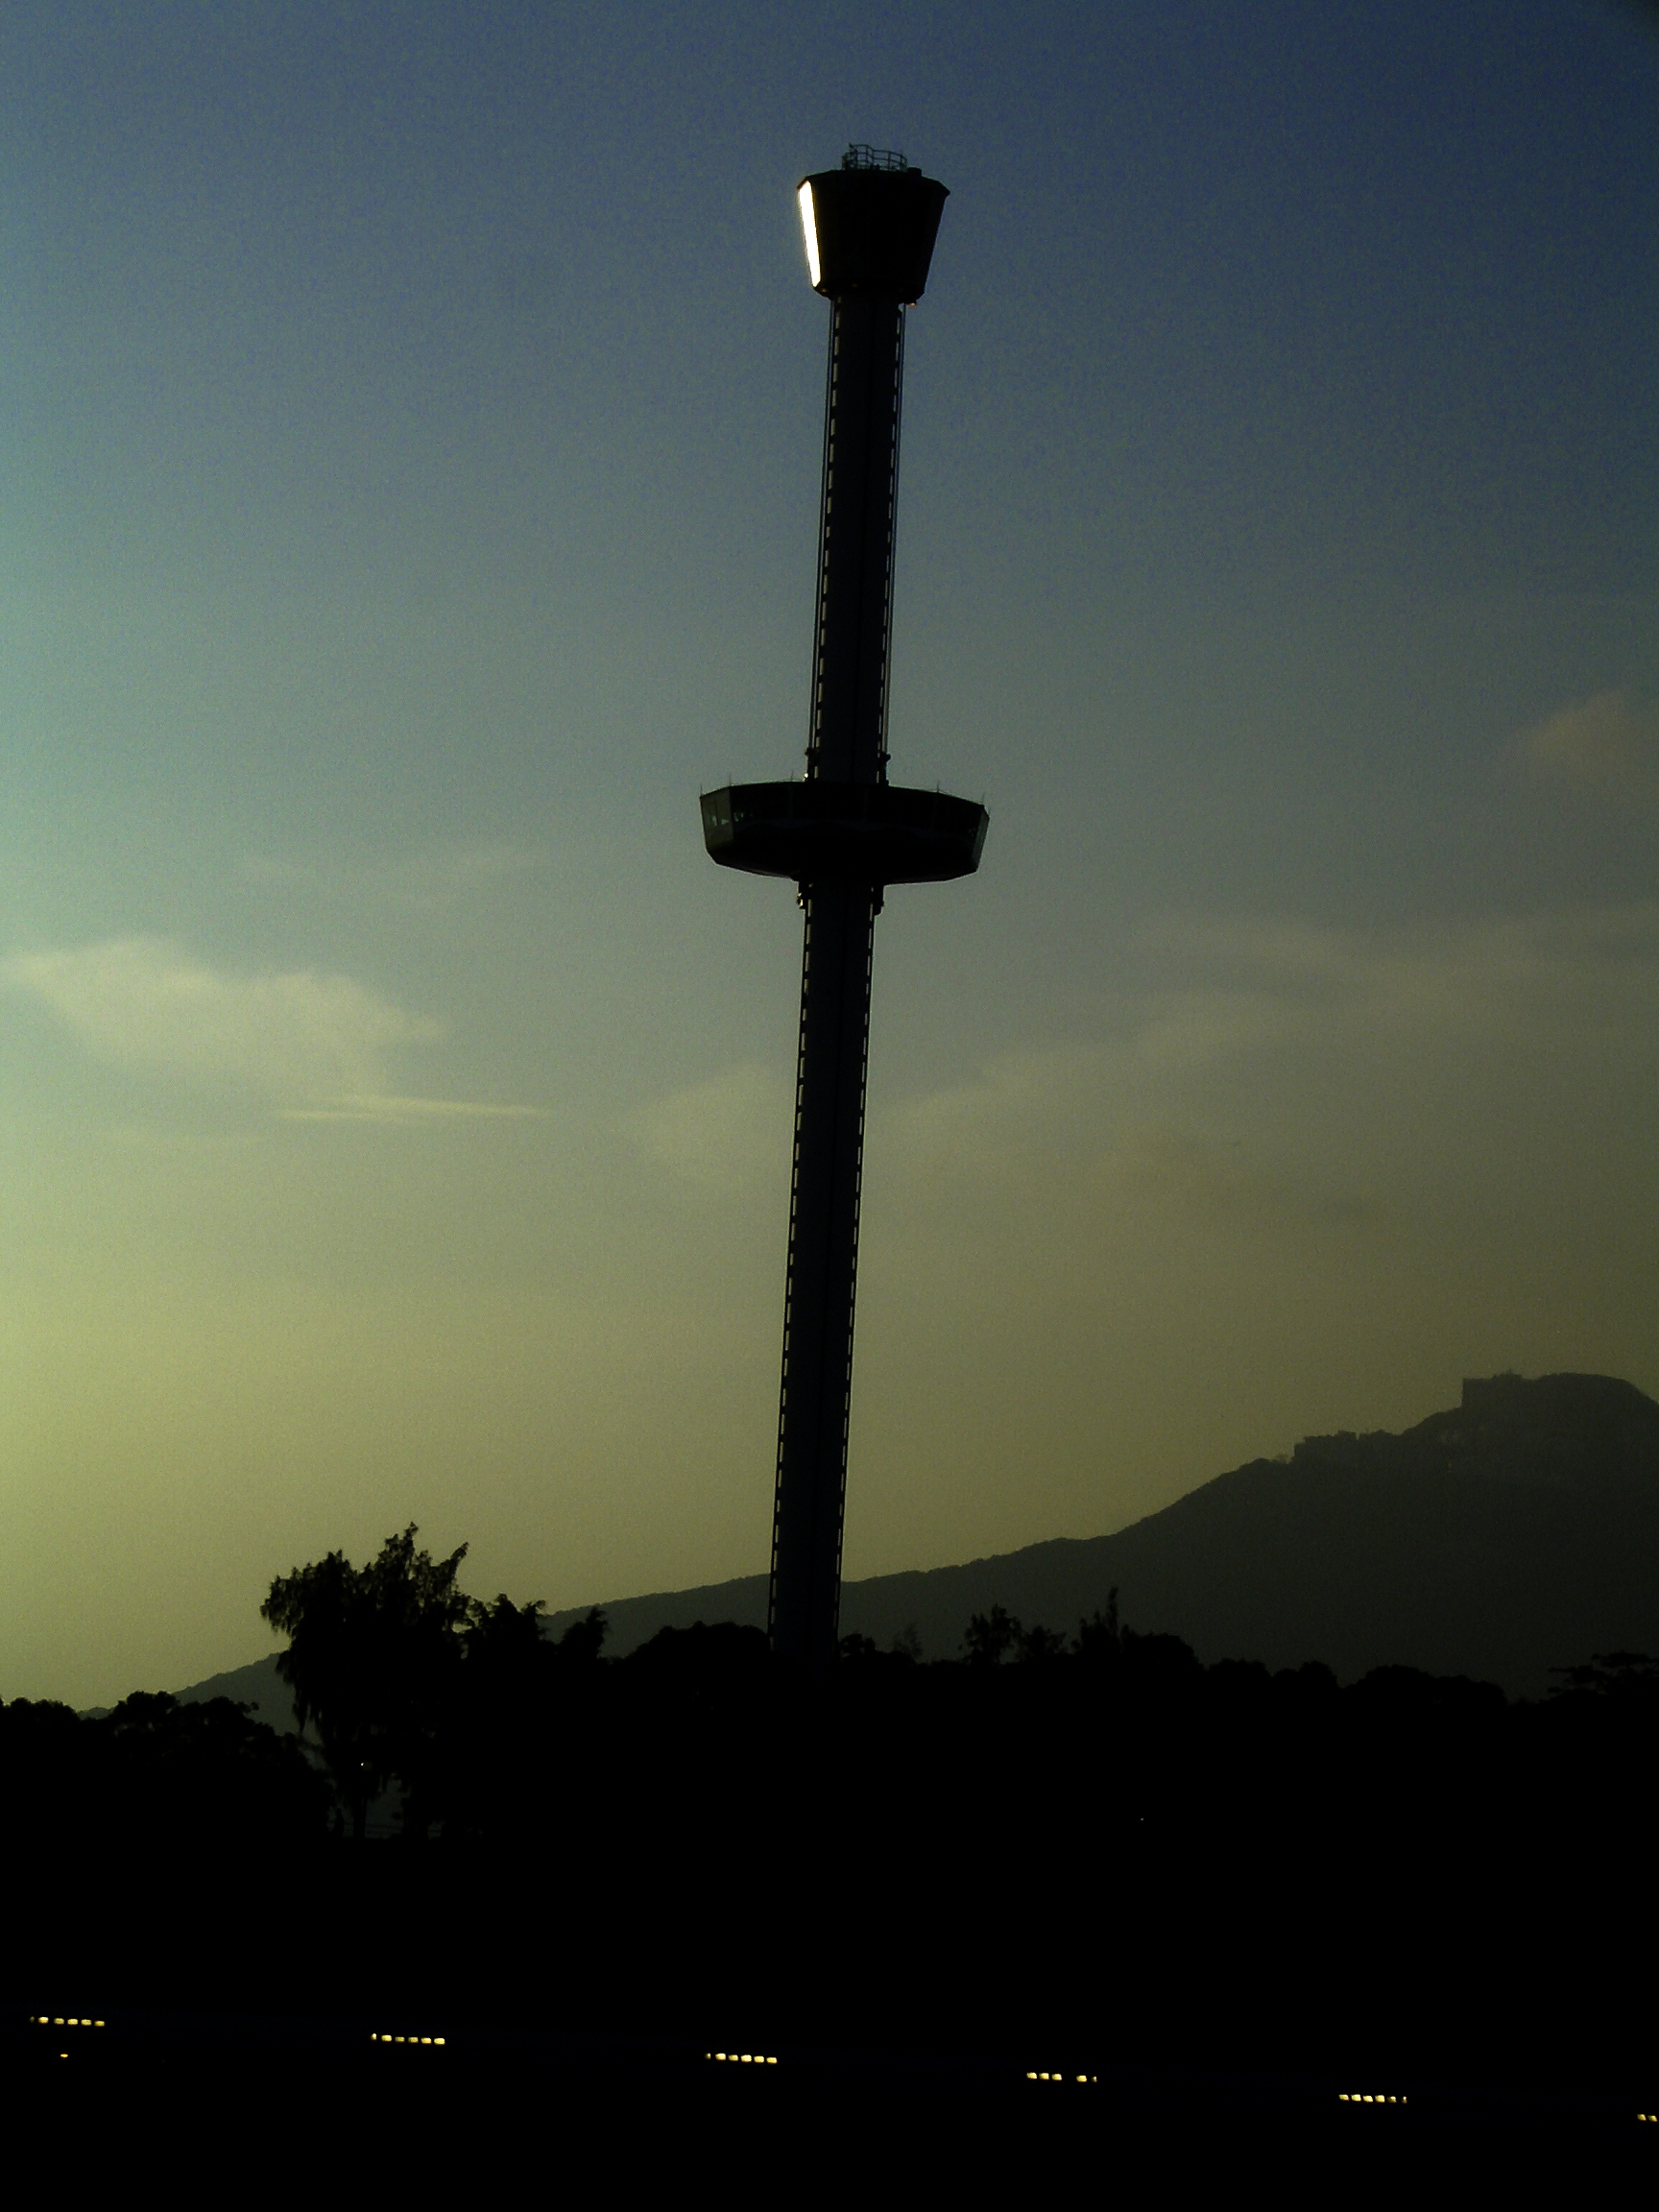 Ocean park tower photo